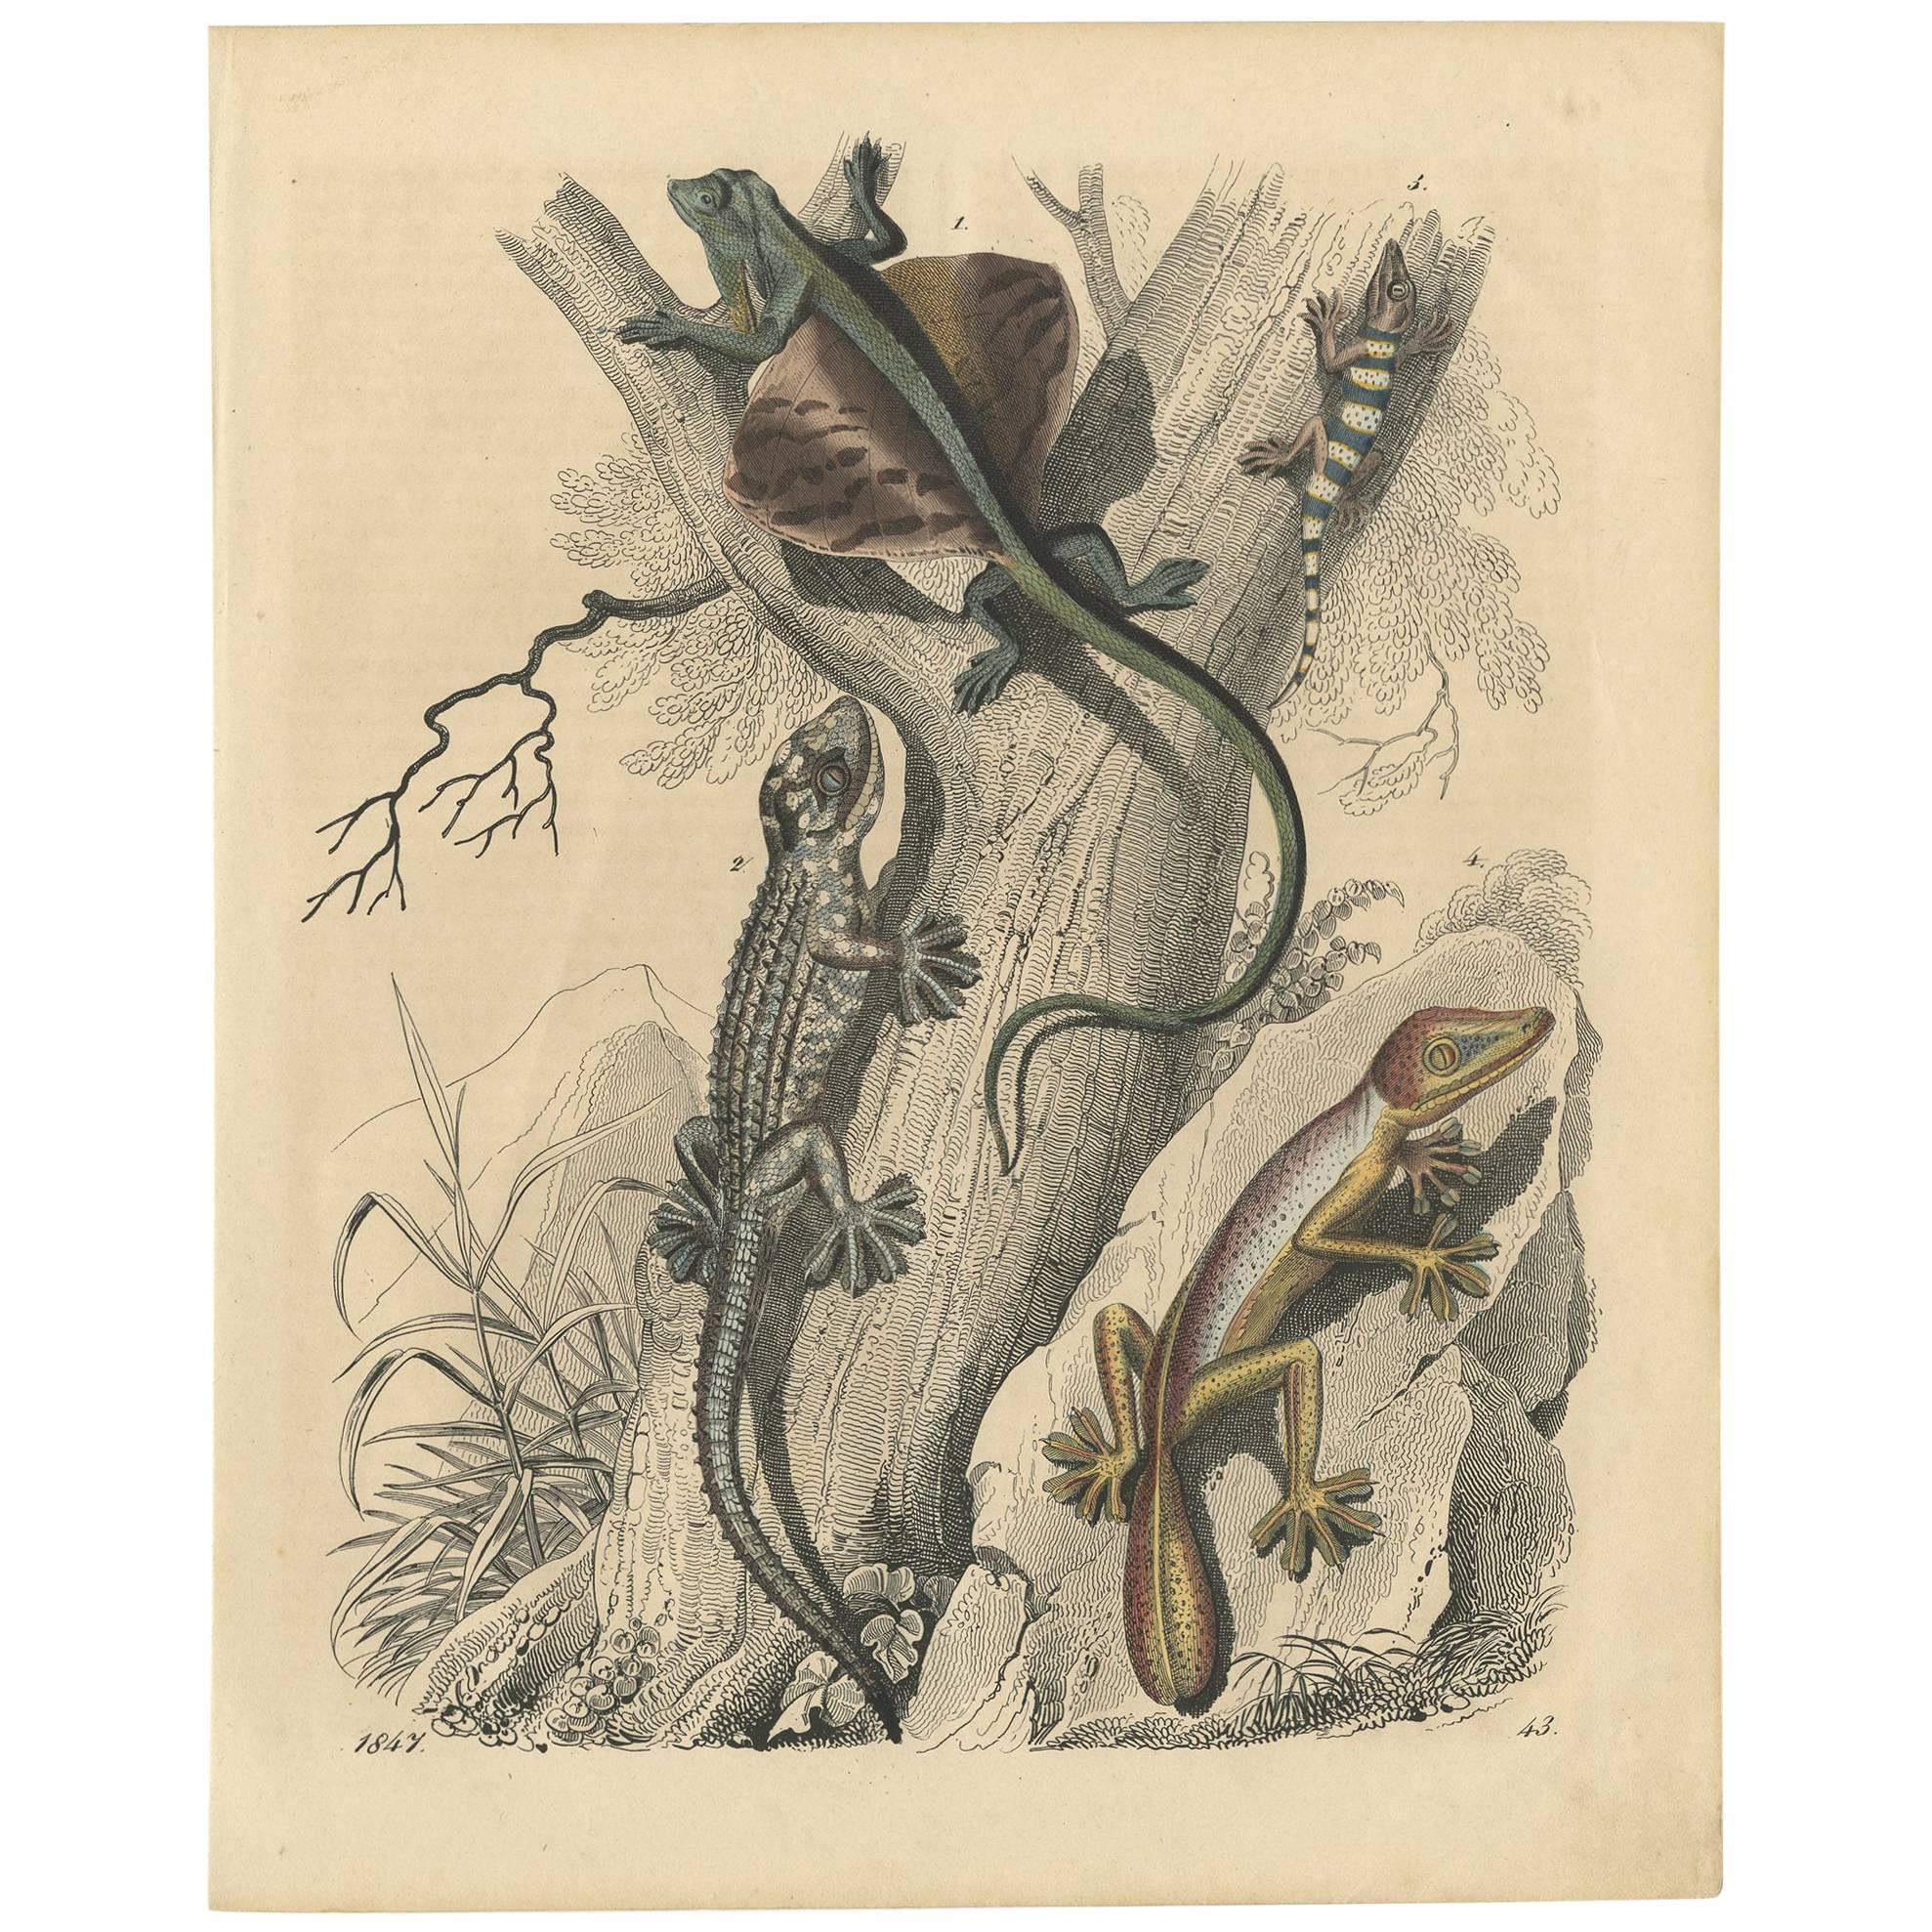 Antique Animal Print of various Amphibians by C. Hoffmann, 1847